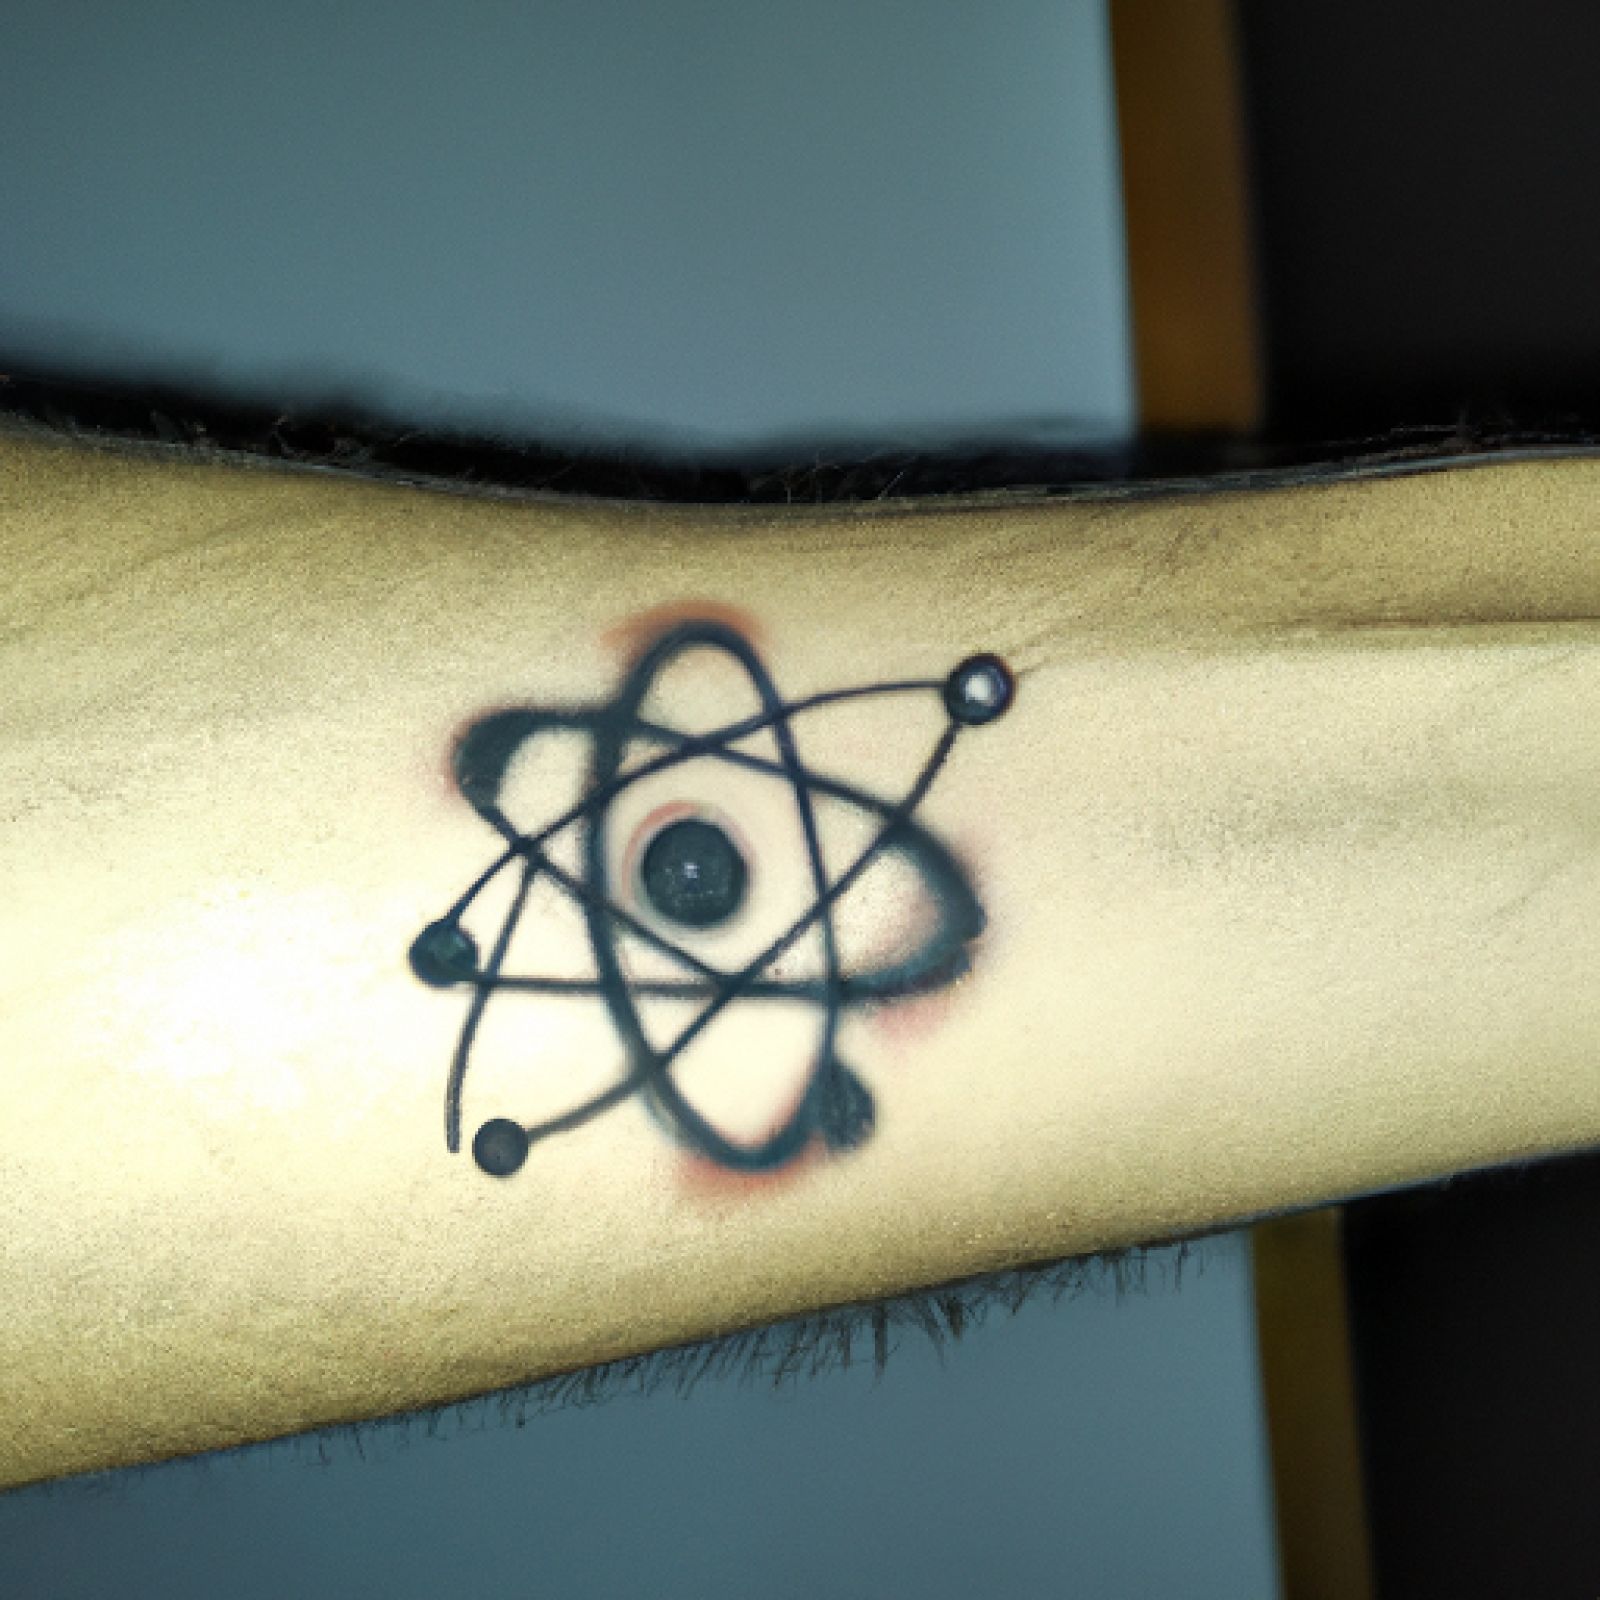 Atom tattoo on arm for men